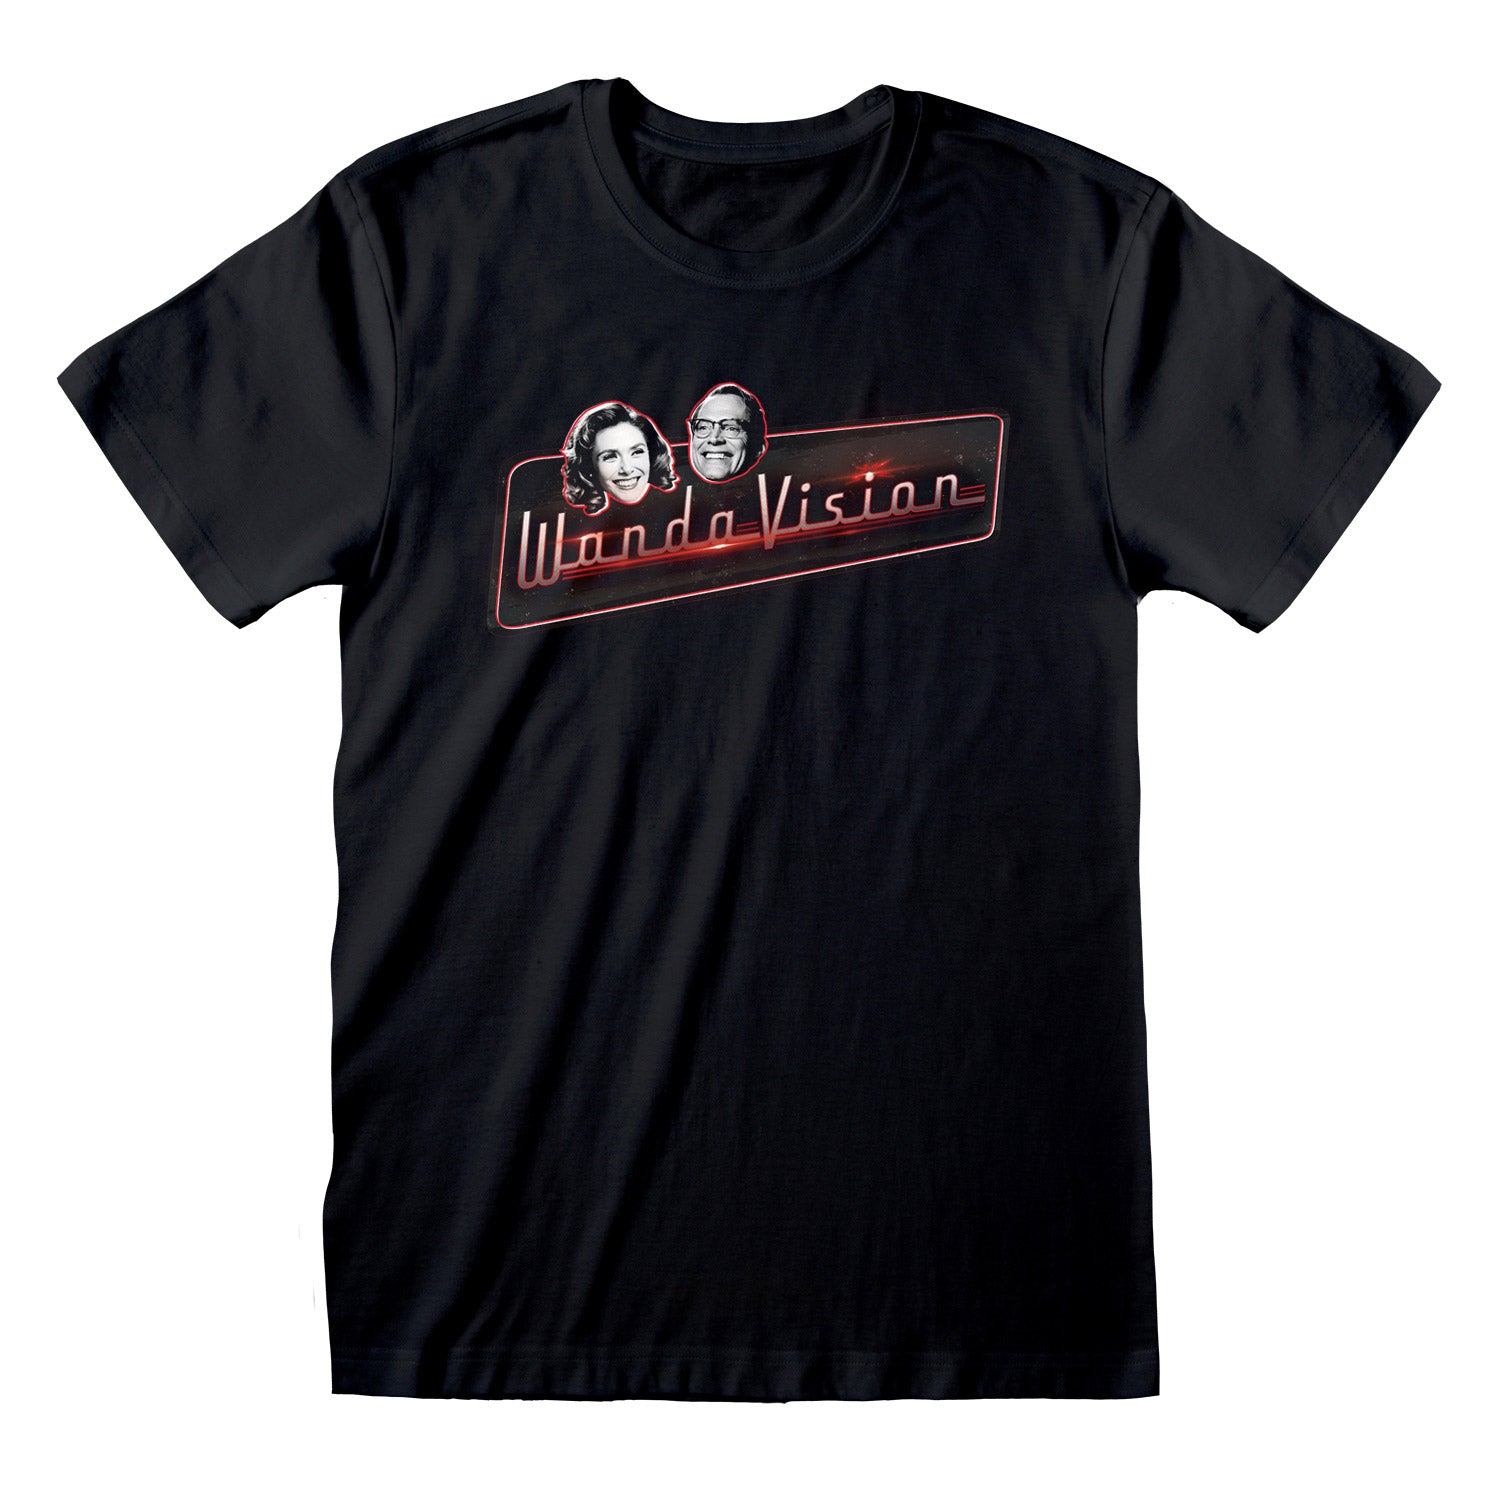 WandaVision - T-Shirt - Black (Marvel)